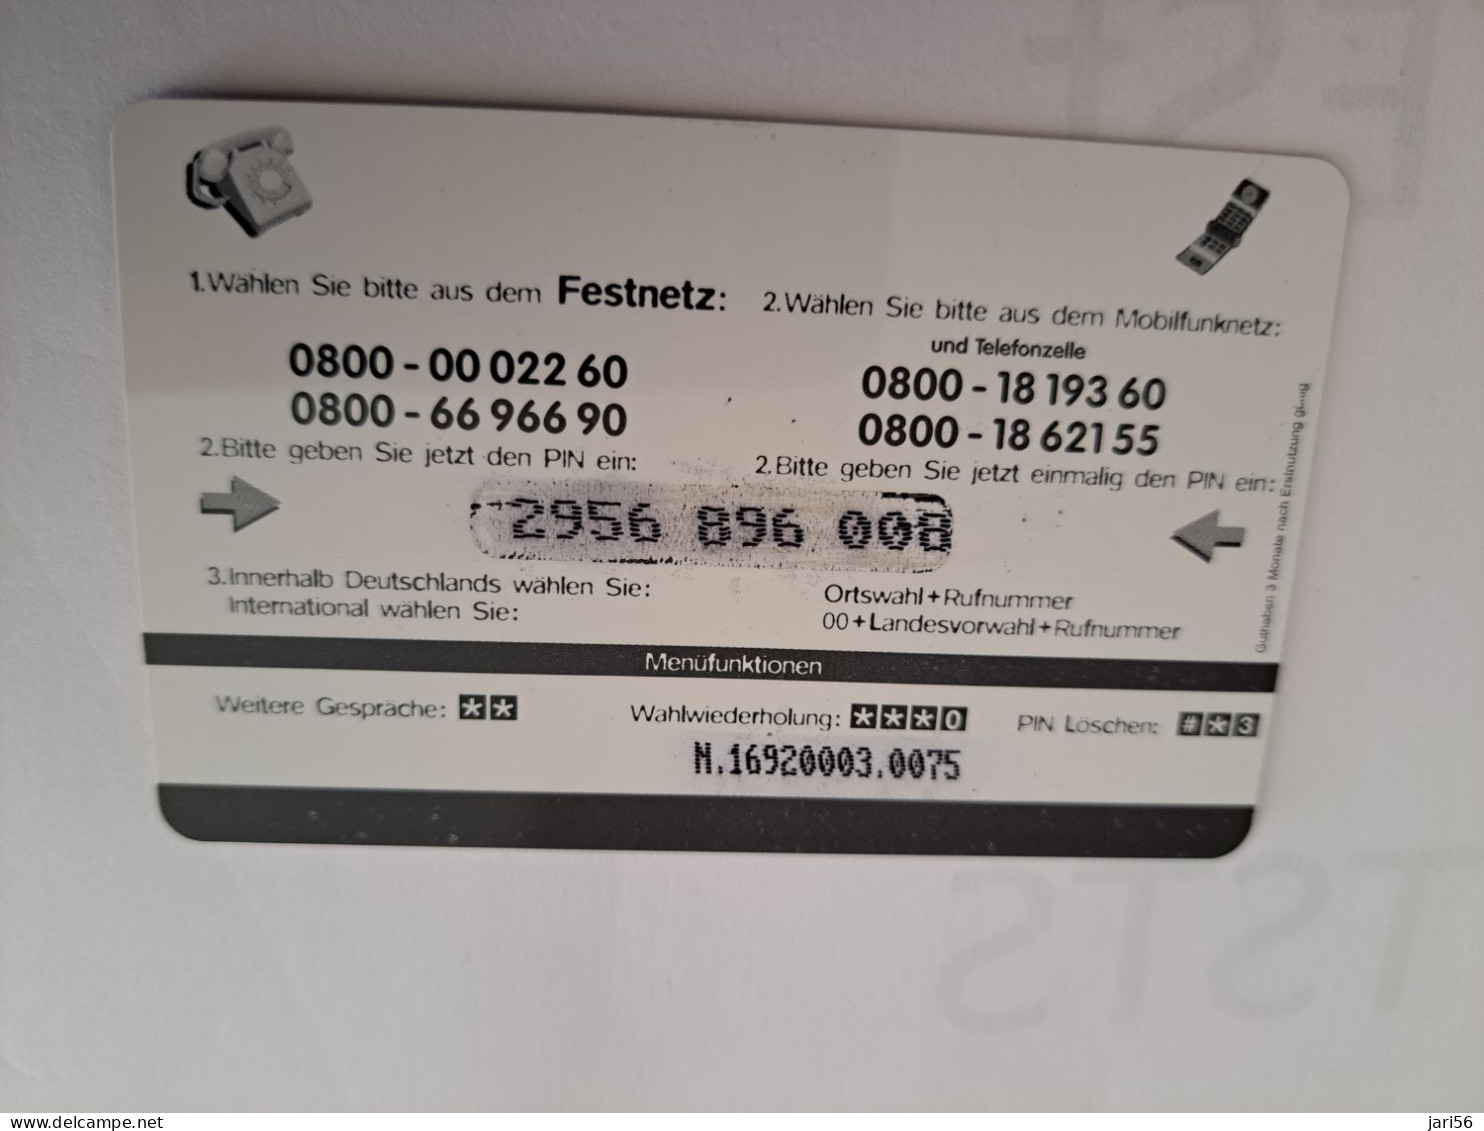 DUITSLAND/GERMANY  € 6,- / PLANET/ PIGEON BIRD   ON CARD        Fine Used  PREPAID  **16531** - [2] Móviles Tarjetas Prepagadas & Recargos